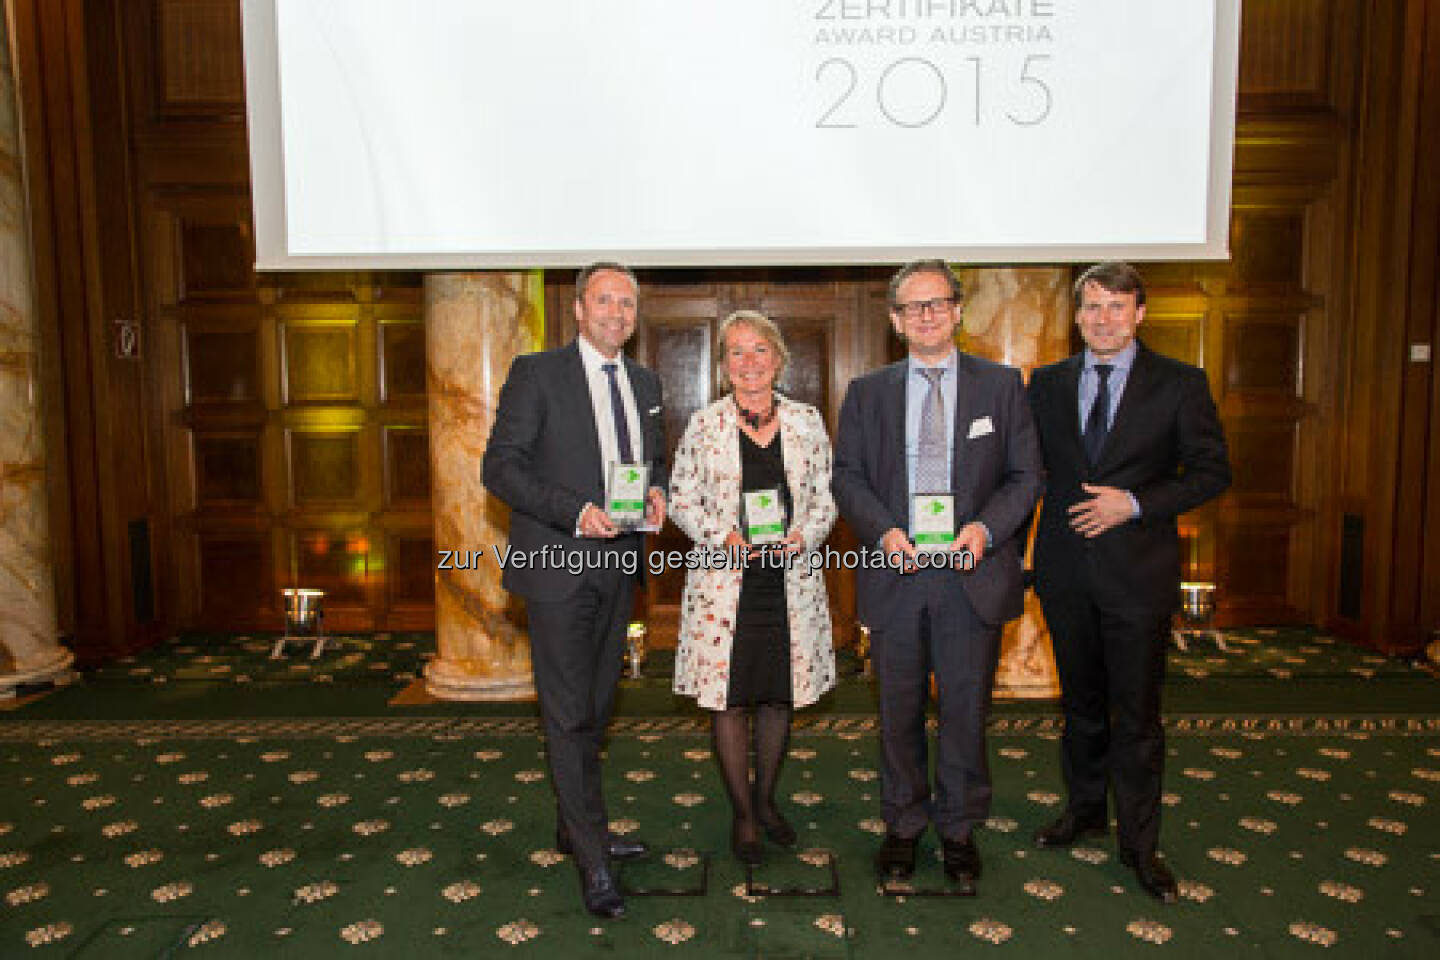 Zertifikate Award 2015 - Frank Weingarts, Heike Arbter, Markus Kaller, Lars Brandau